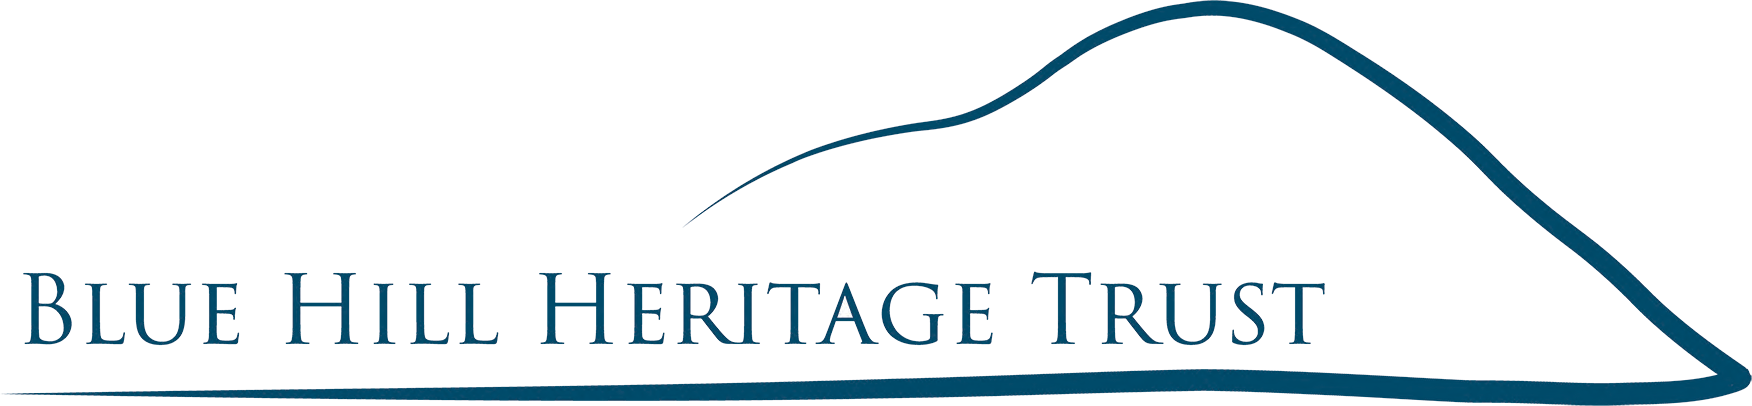 Blue Hill Heritage Trust logo